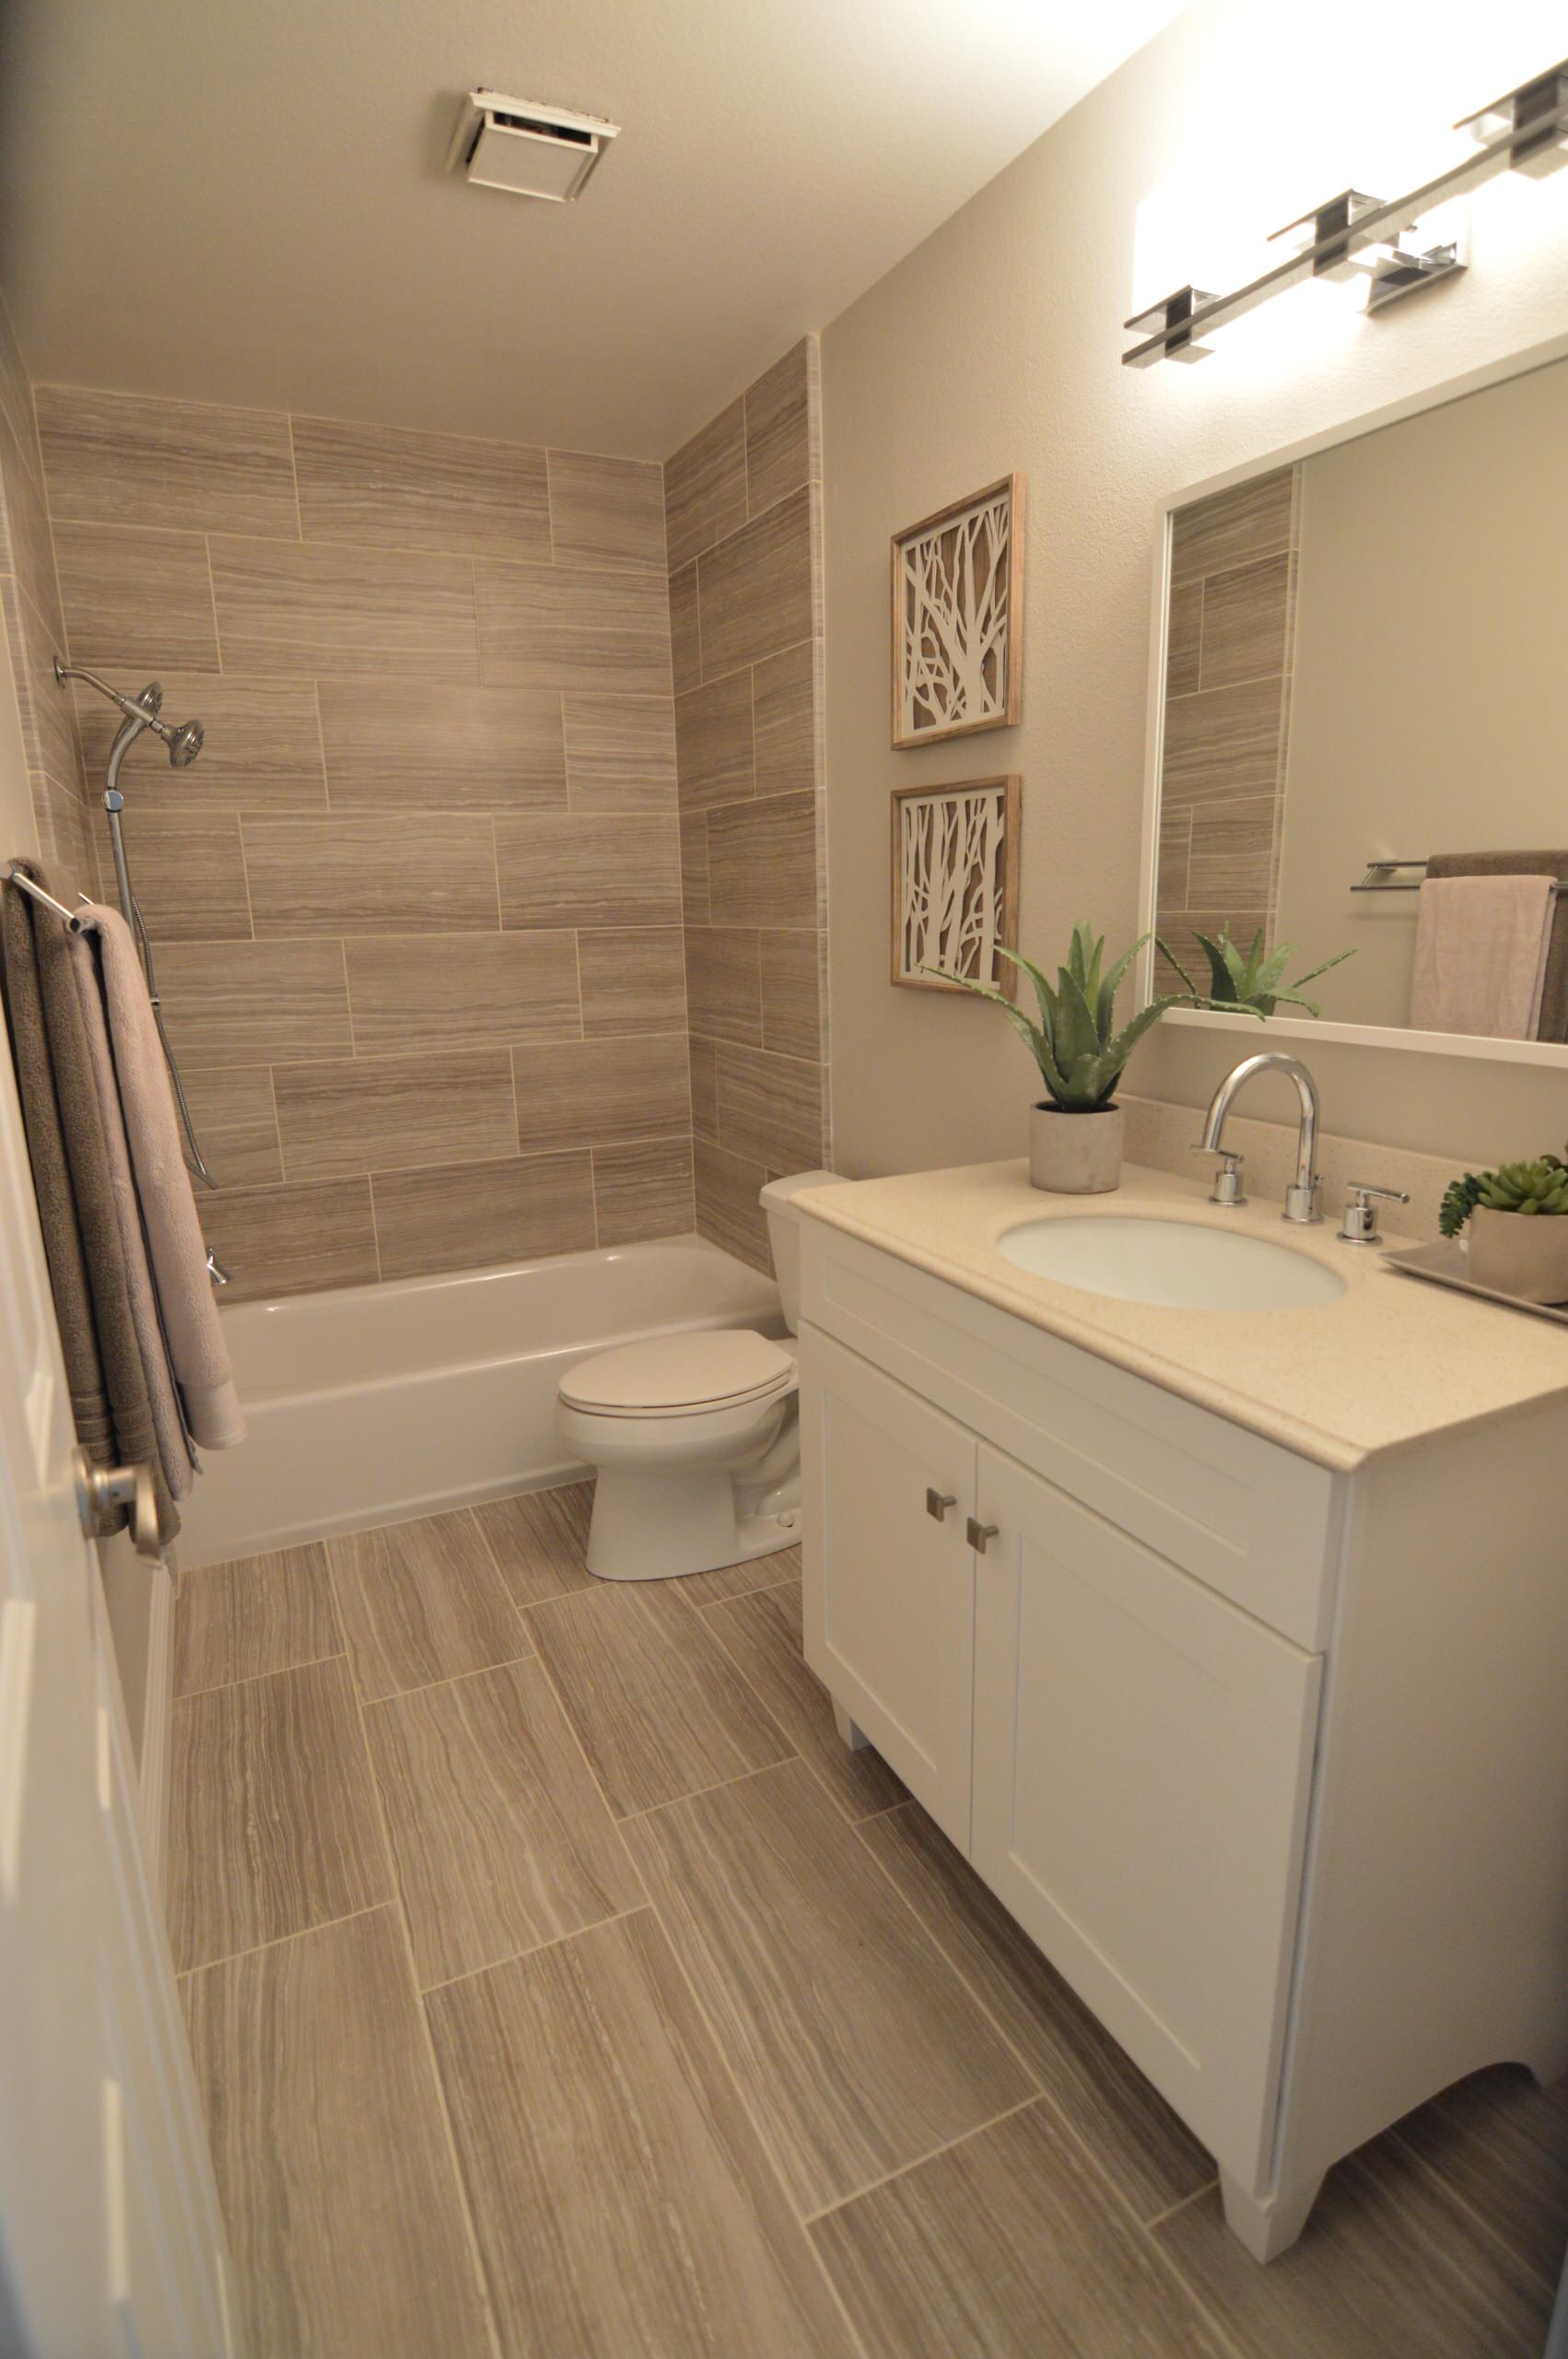 75 Tub Shower Combo Ideas You Ll Love, Small Bathroom Ideas With Bathtub And Shower